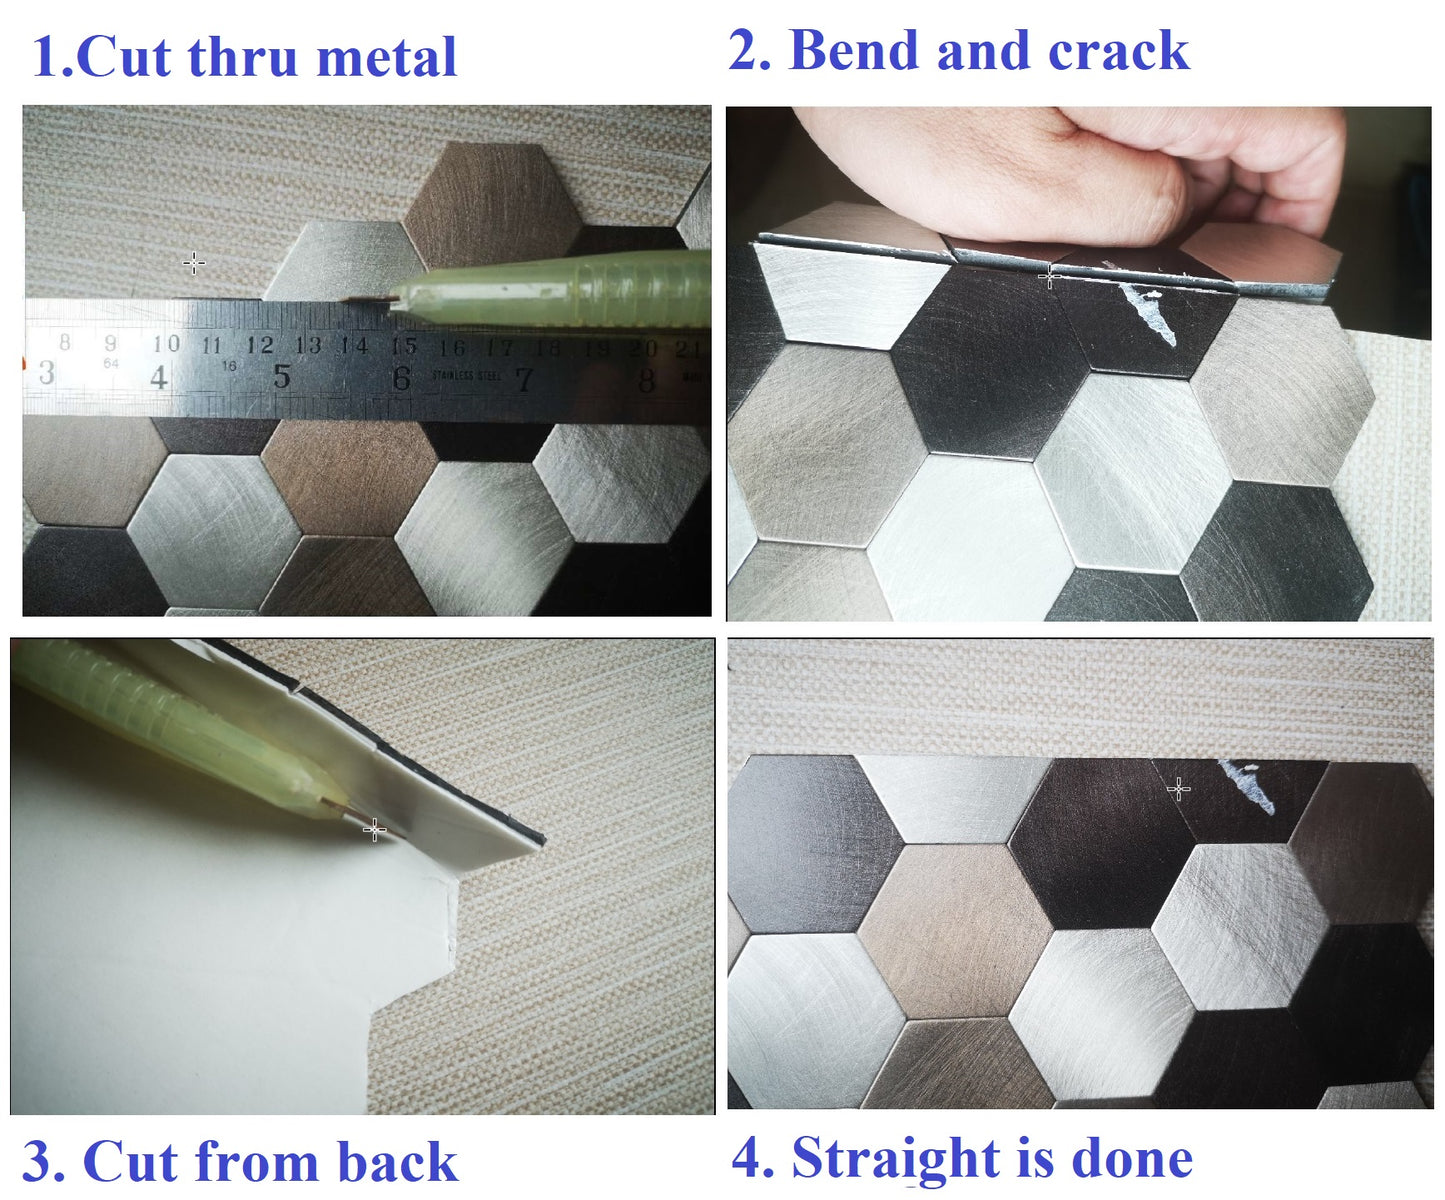 Decopus Faux Tile  Brick Peel and Stick Backsplash (Faux Stone Tile - Marble Ivory 5pc/Pack)